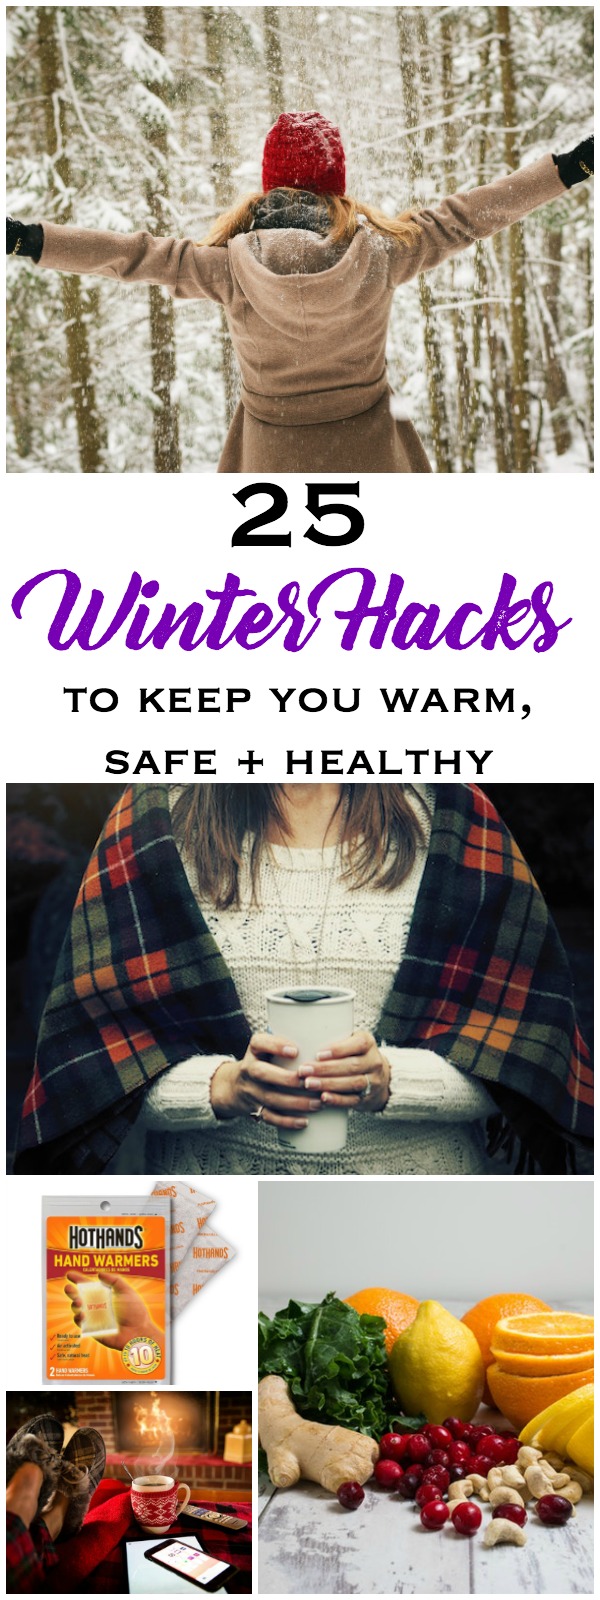 25 Winter Hacks to Keep You Warm, Safe + Healthy